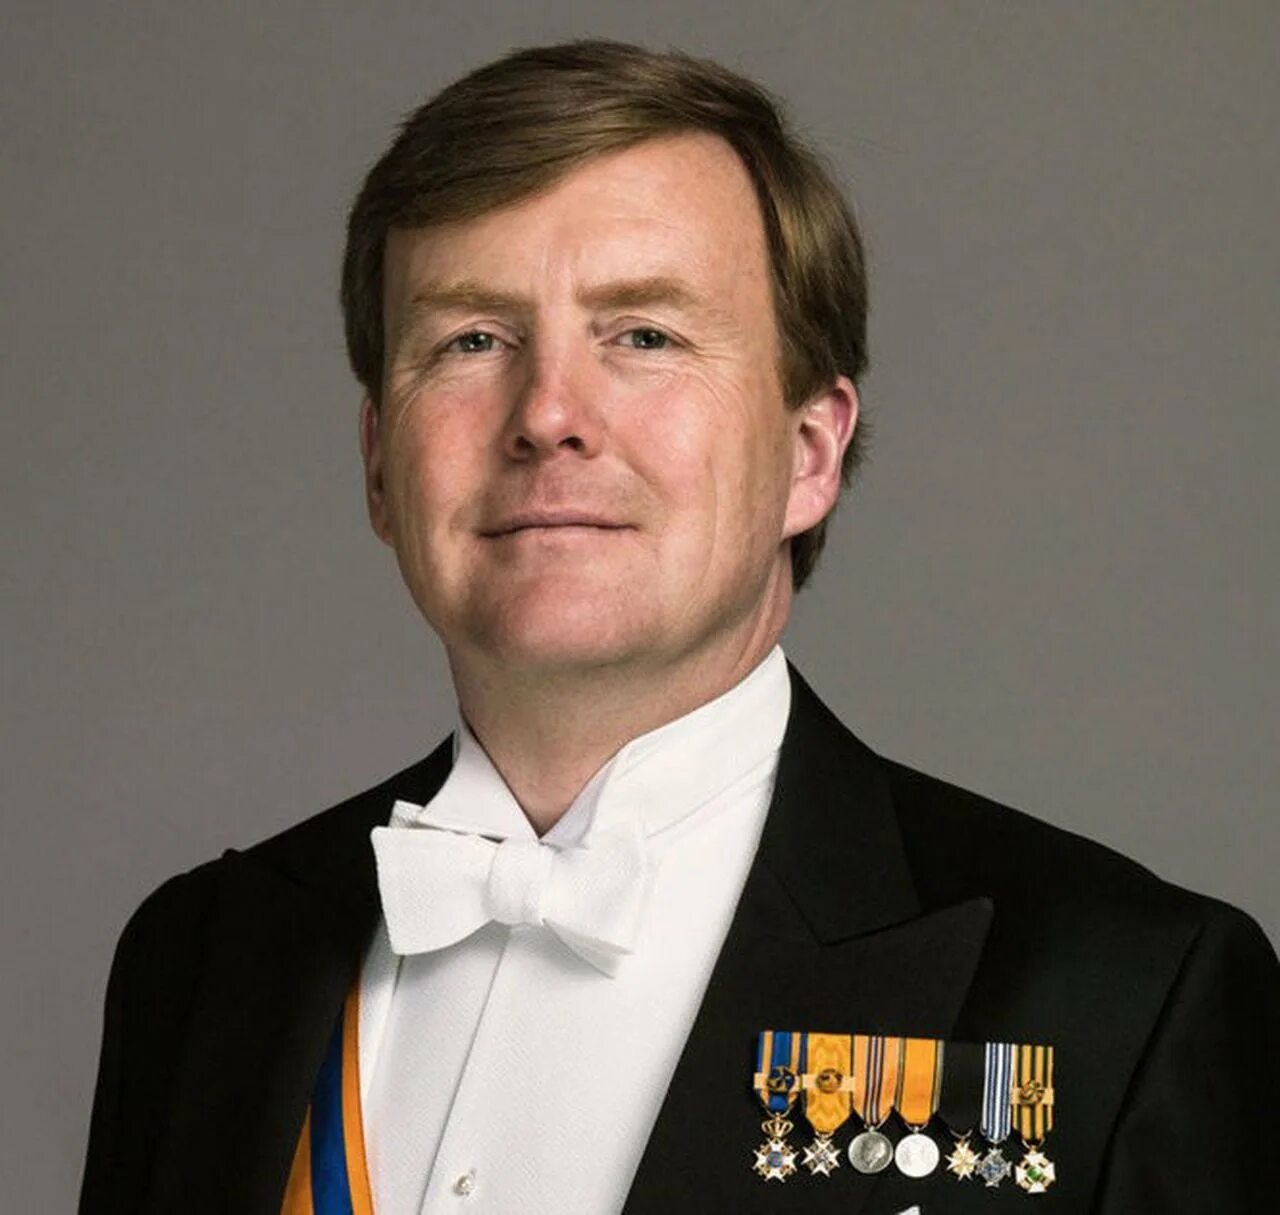 Глава государства нидерландов. Король Нидерландов Виллем–Александер.